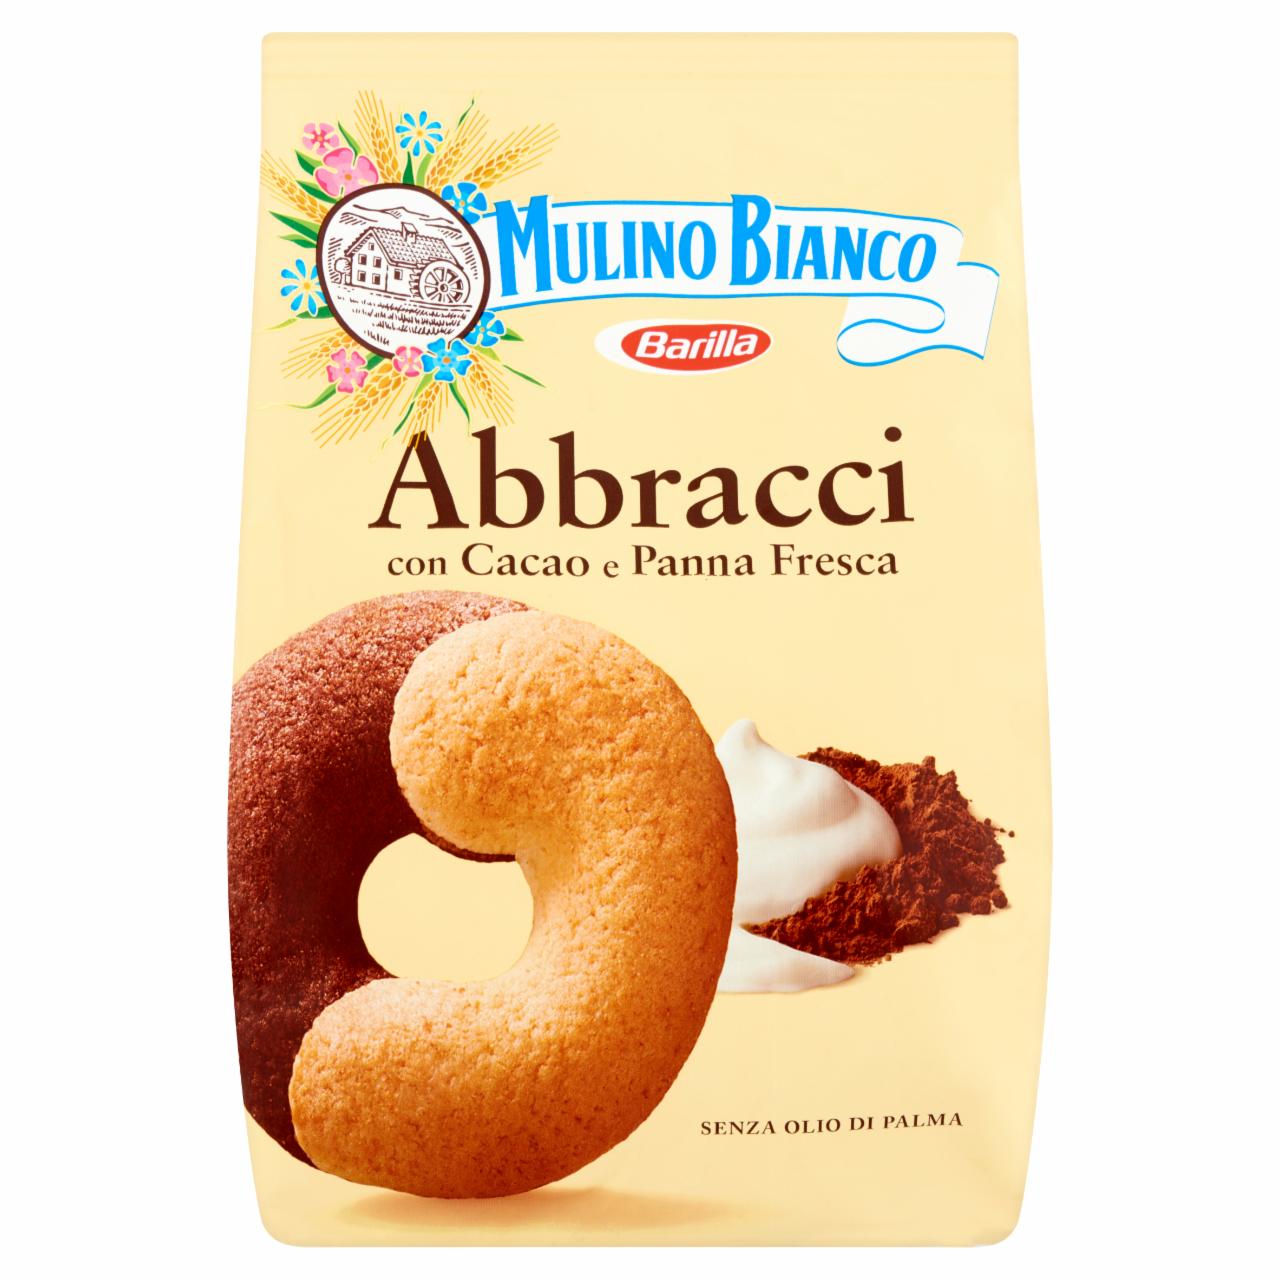 Képek - Mulino Bianco Abbracci tejszínes-kakaós omlós keksz 350 g